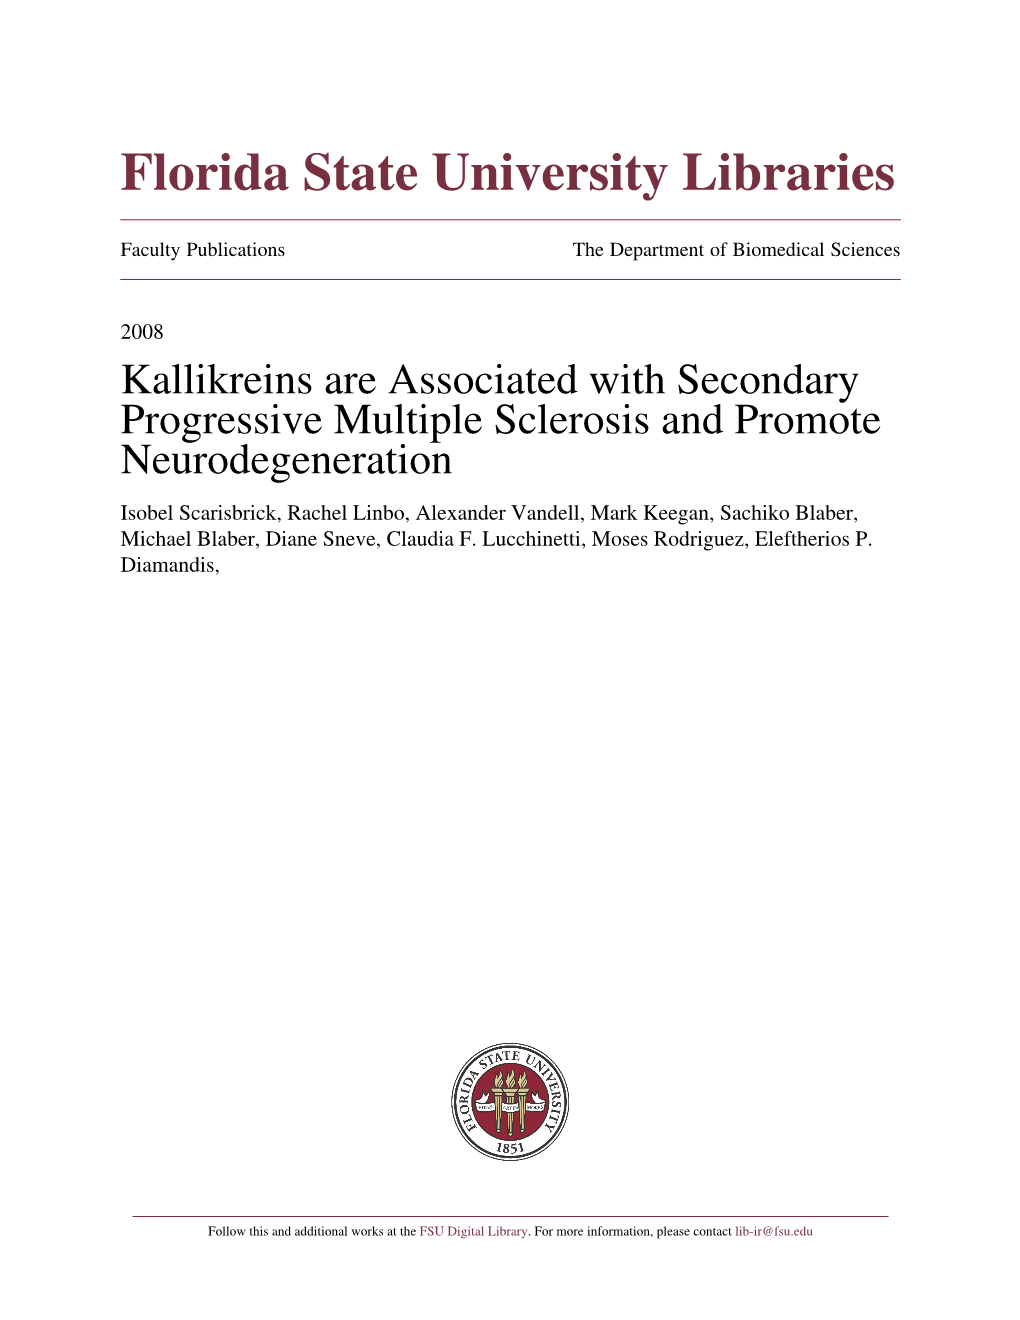 Kallikreins Are Associated with Secondary Progressive Multiple